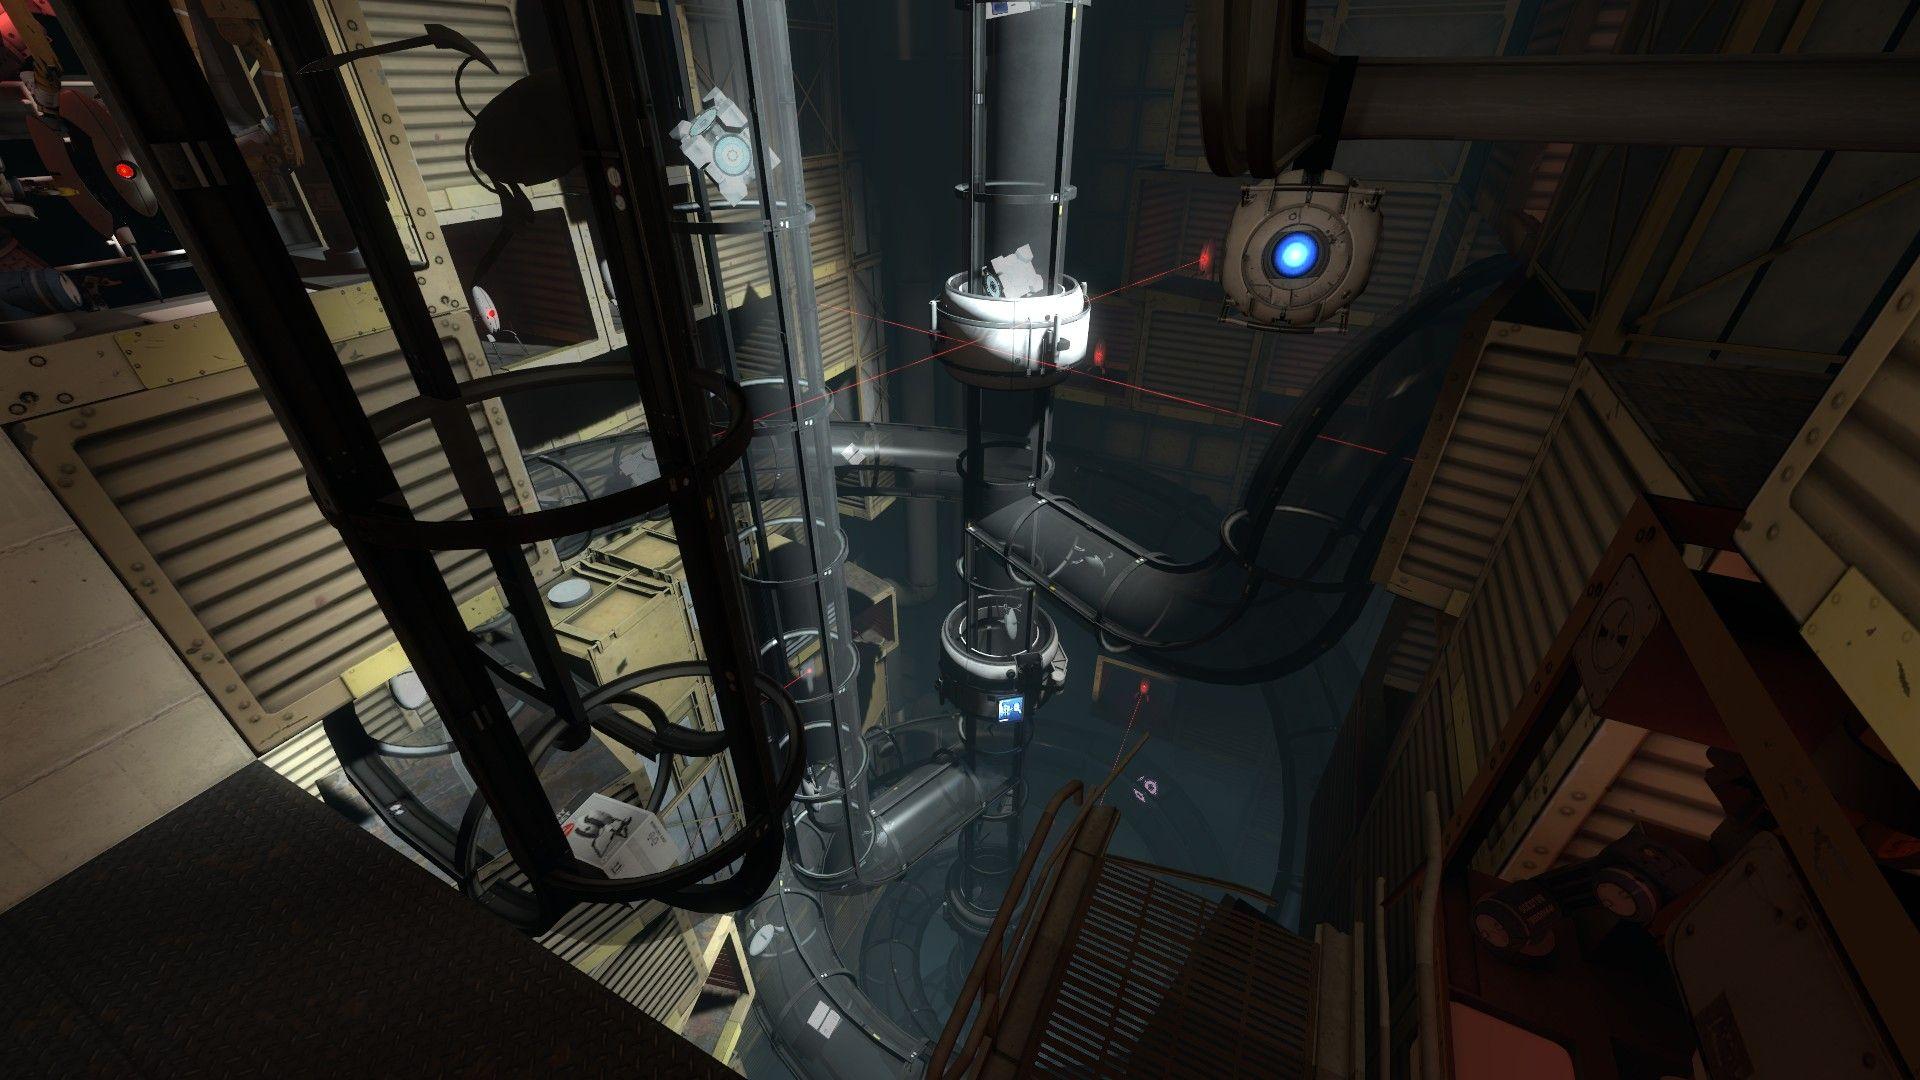 Screenshot №8 from game Portal 2